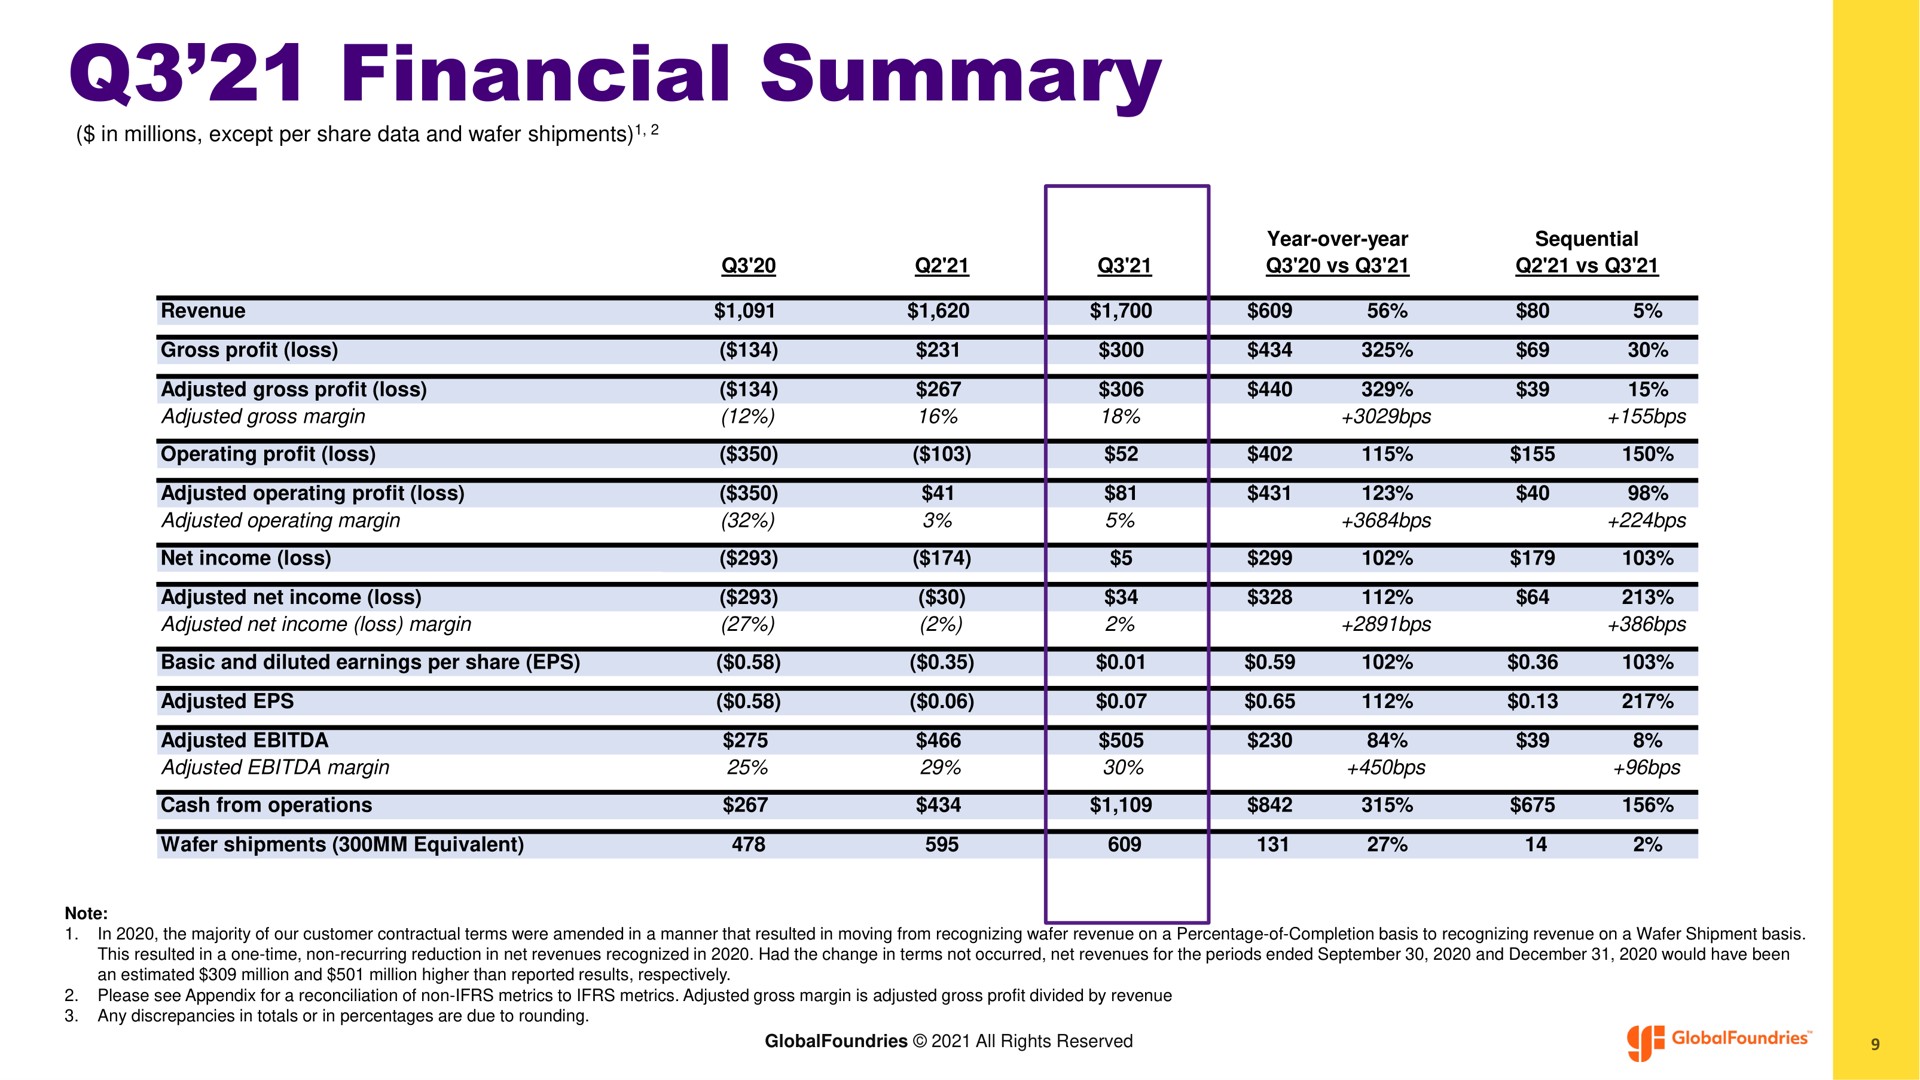 financial summary | GlobalFoundries